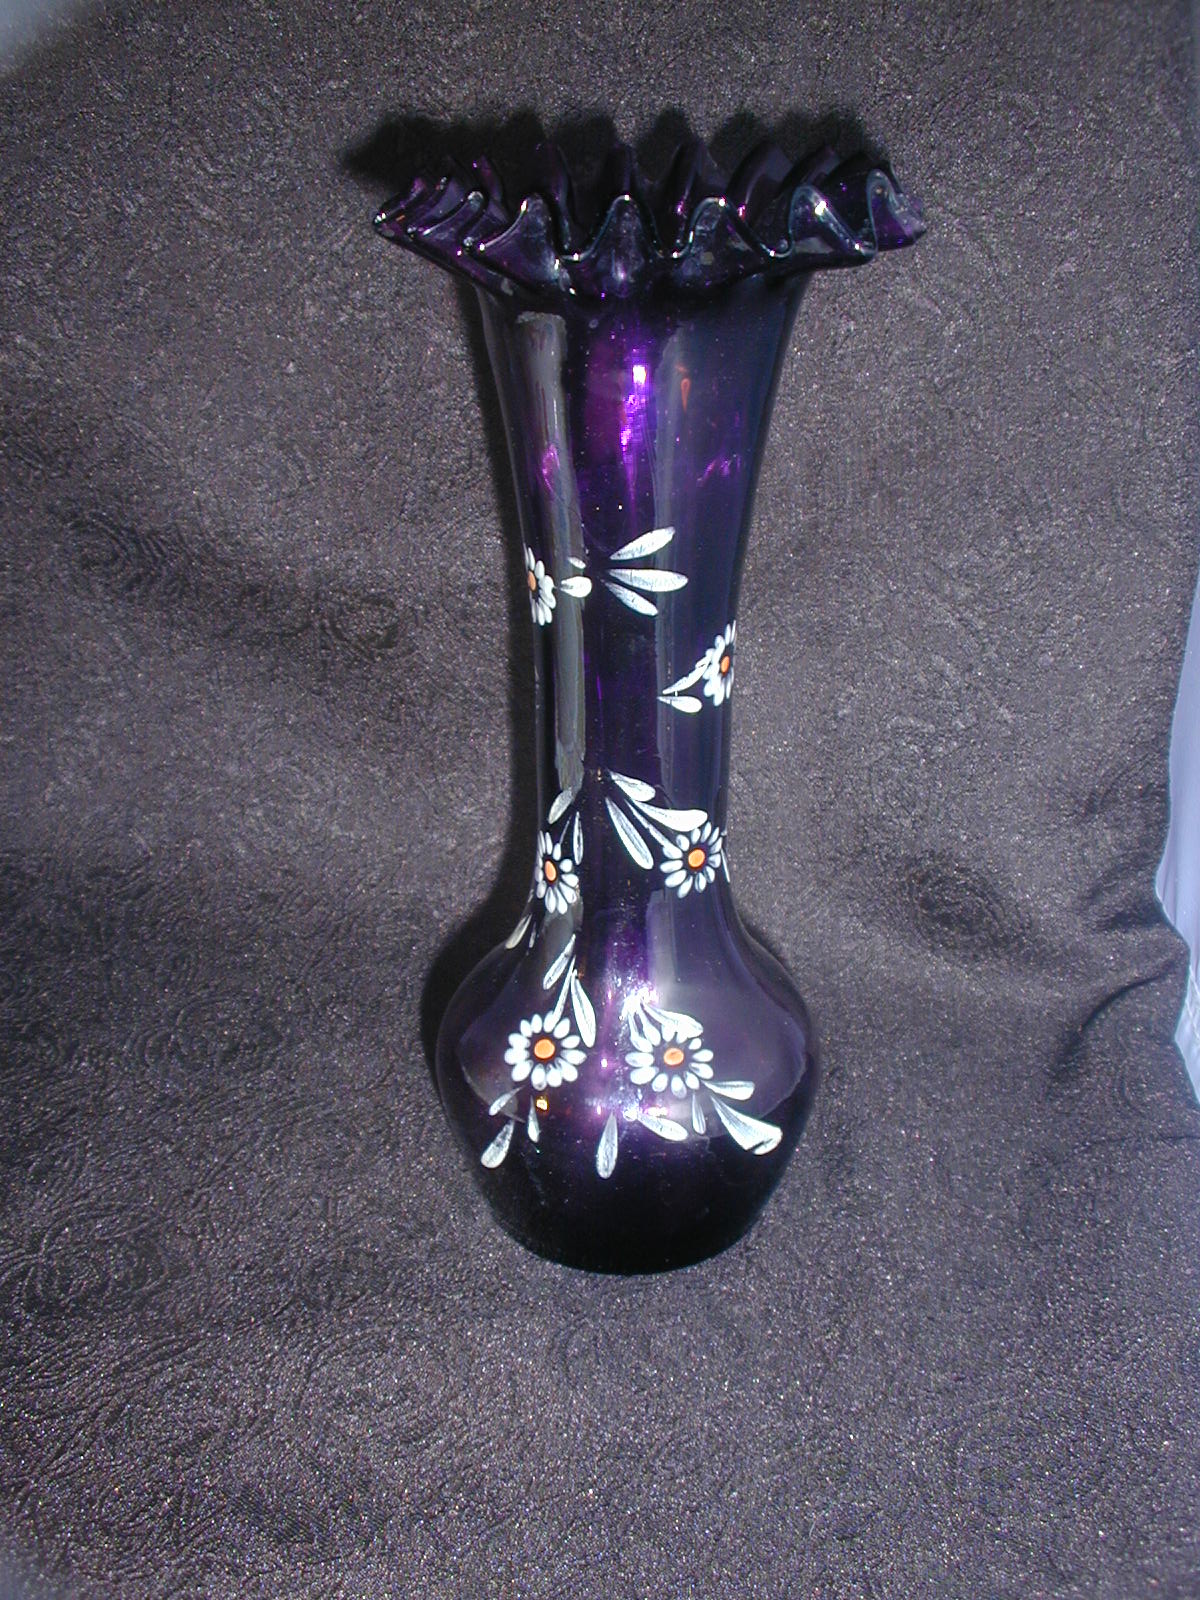 Amethyst Vase (5).JPG